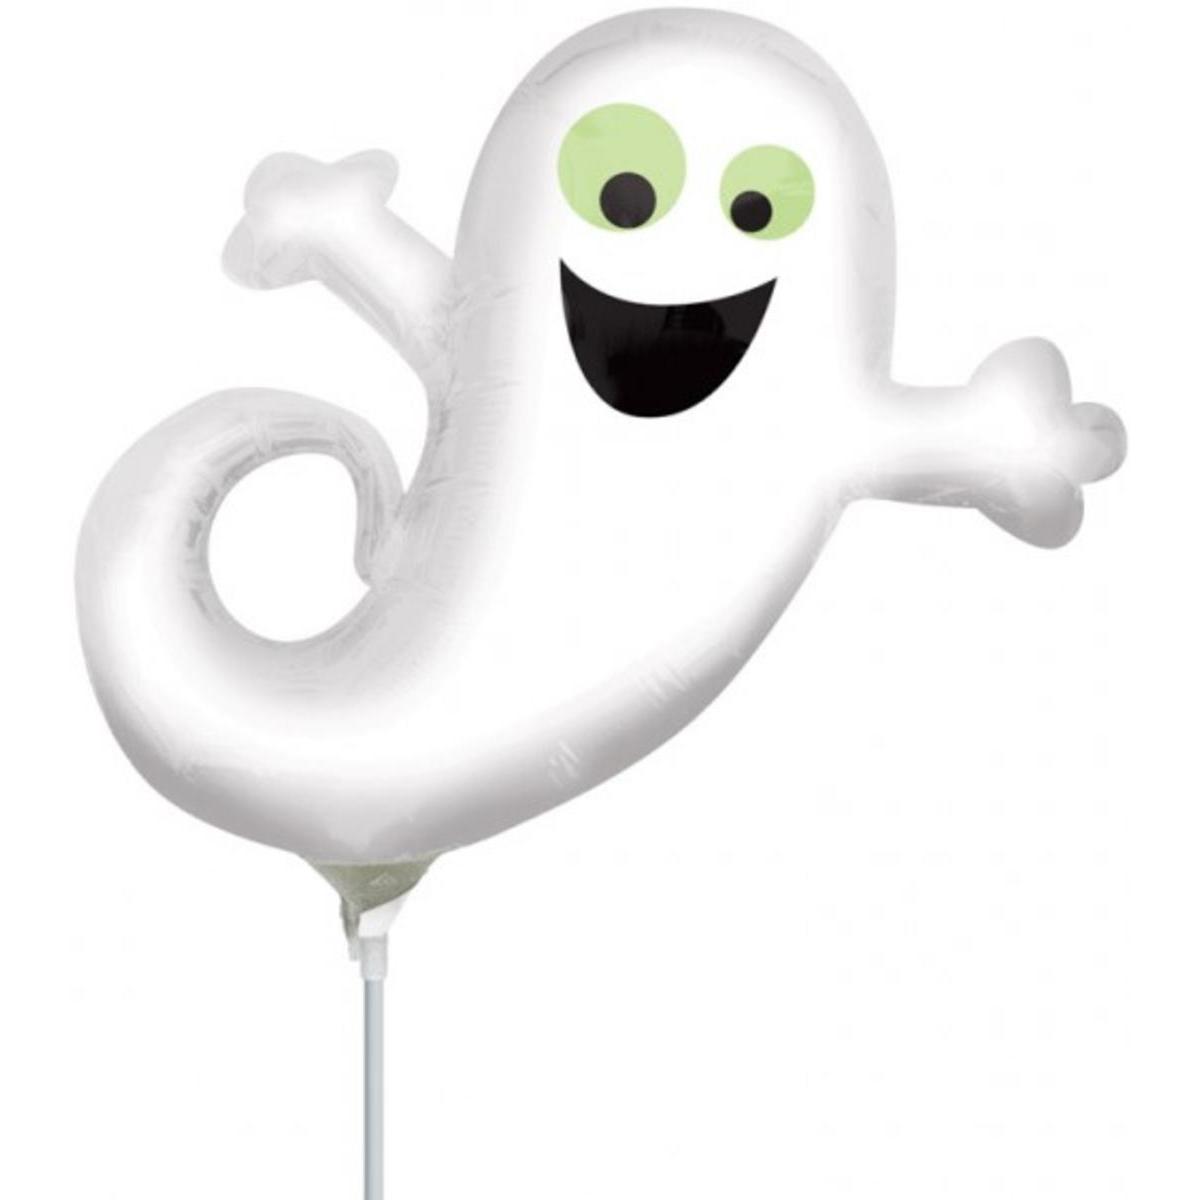 Ballon Halloween fantôme gonflable et sa tige - Blanc